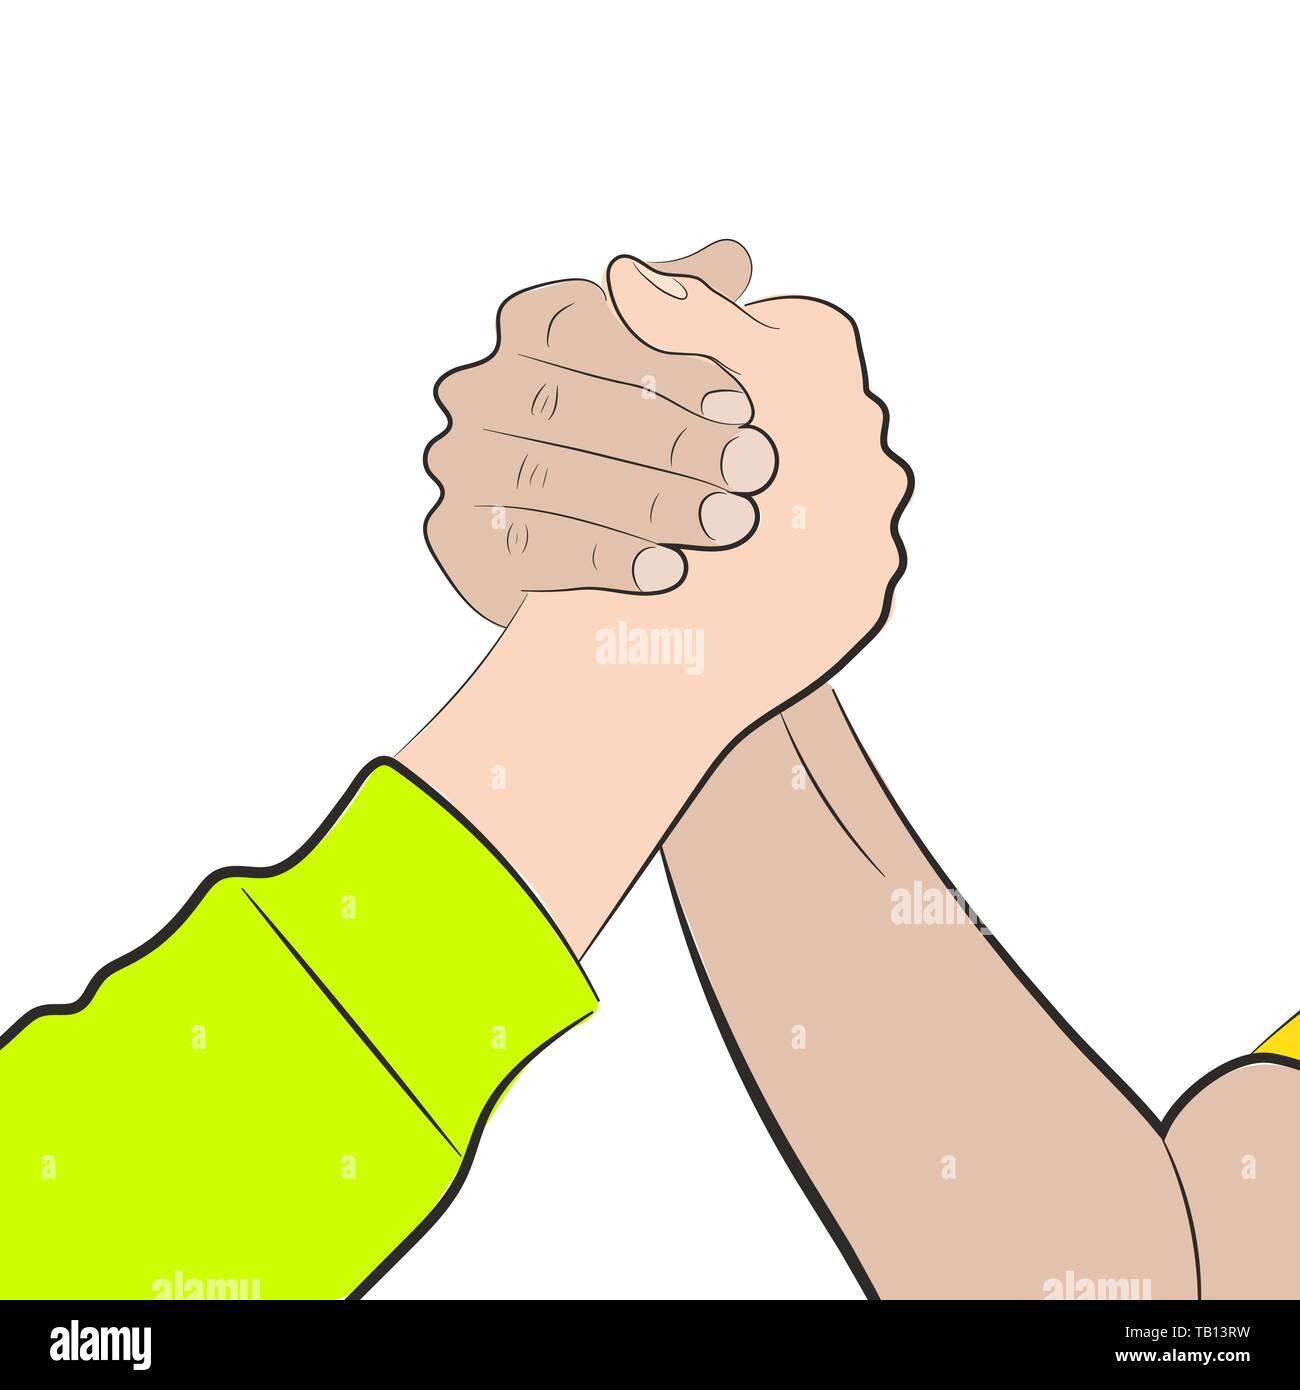 Arm Wrestling. Vector Illustration. Wrestling hands in hand drawn style Stock Vector